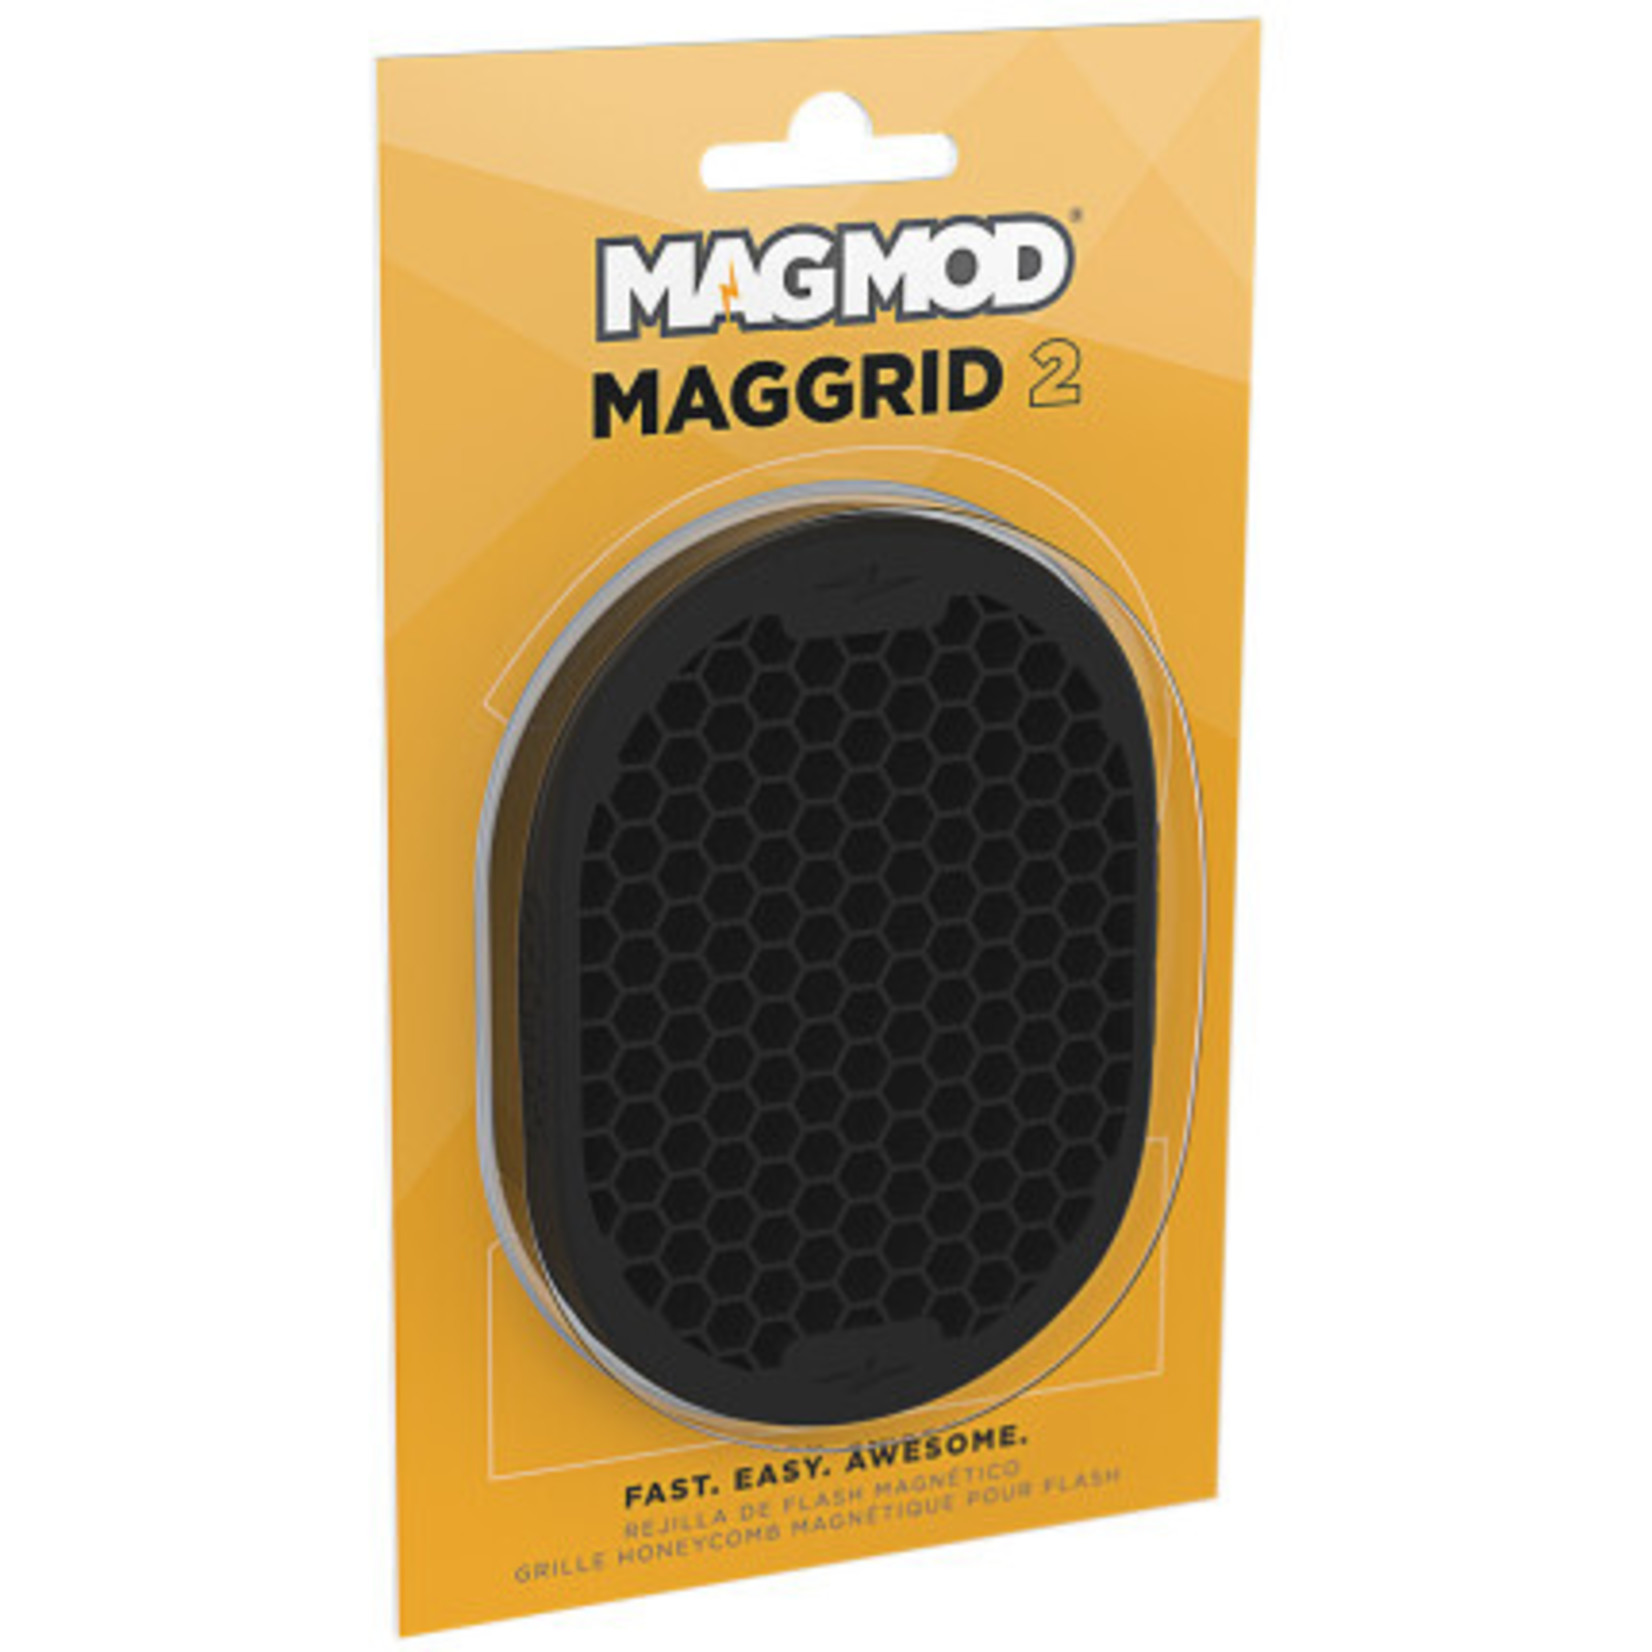 MagMod MagMod MagGrid 2